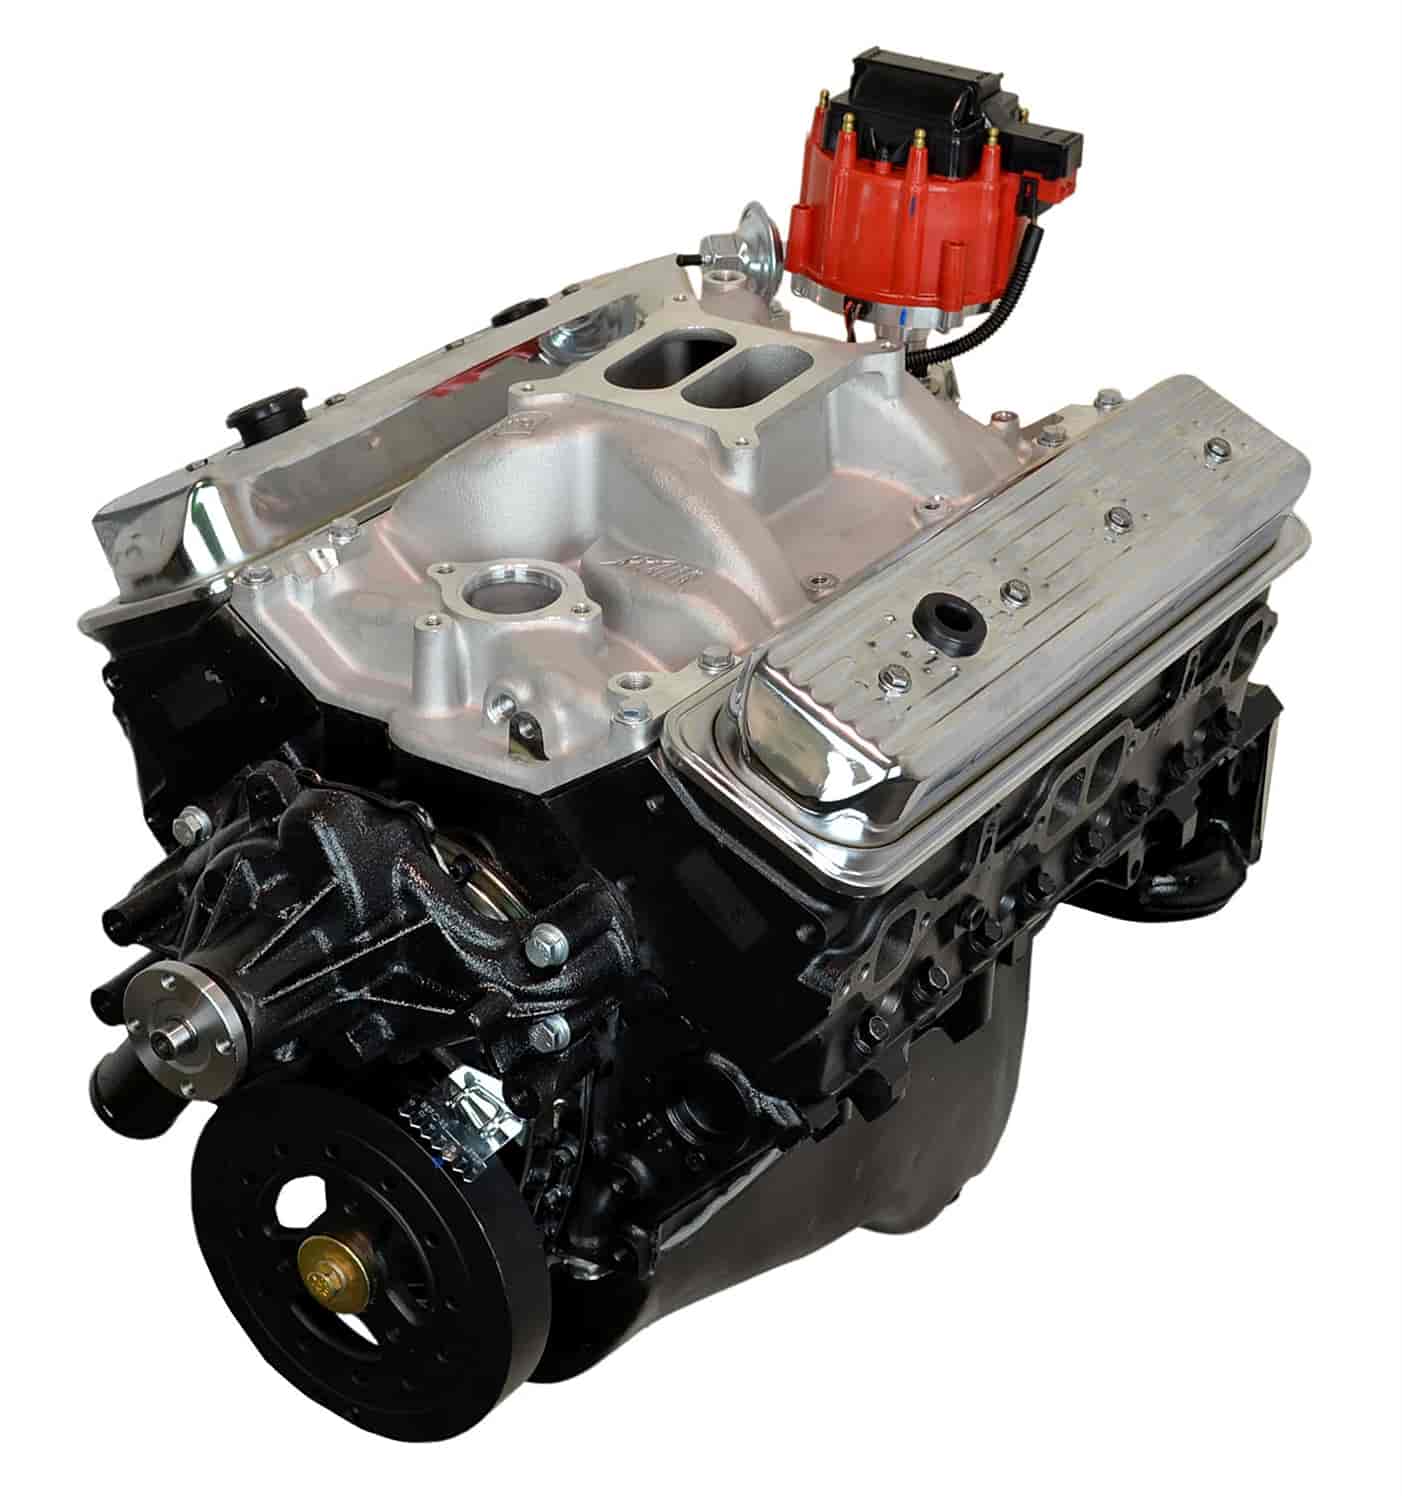 High Performance Crate Engine Small Block Chevy 350ci / 350HP / 400TQ